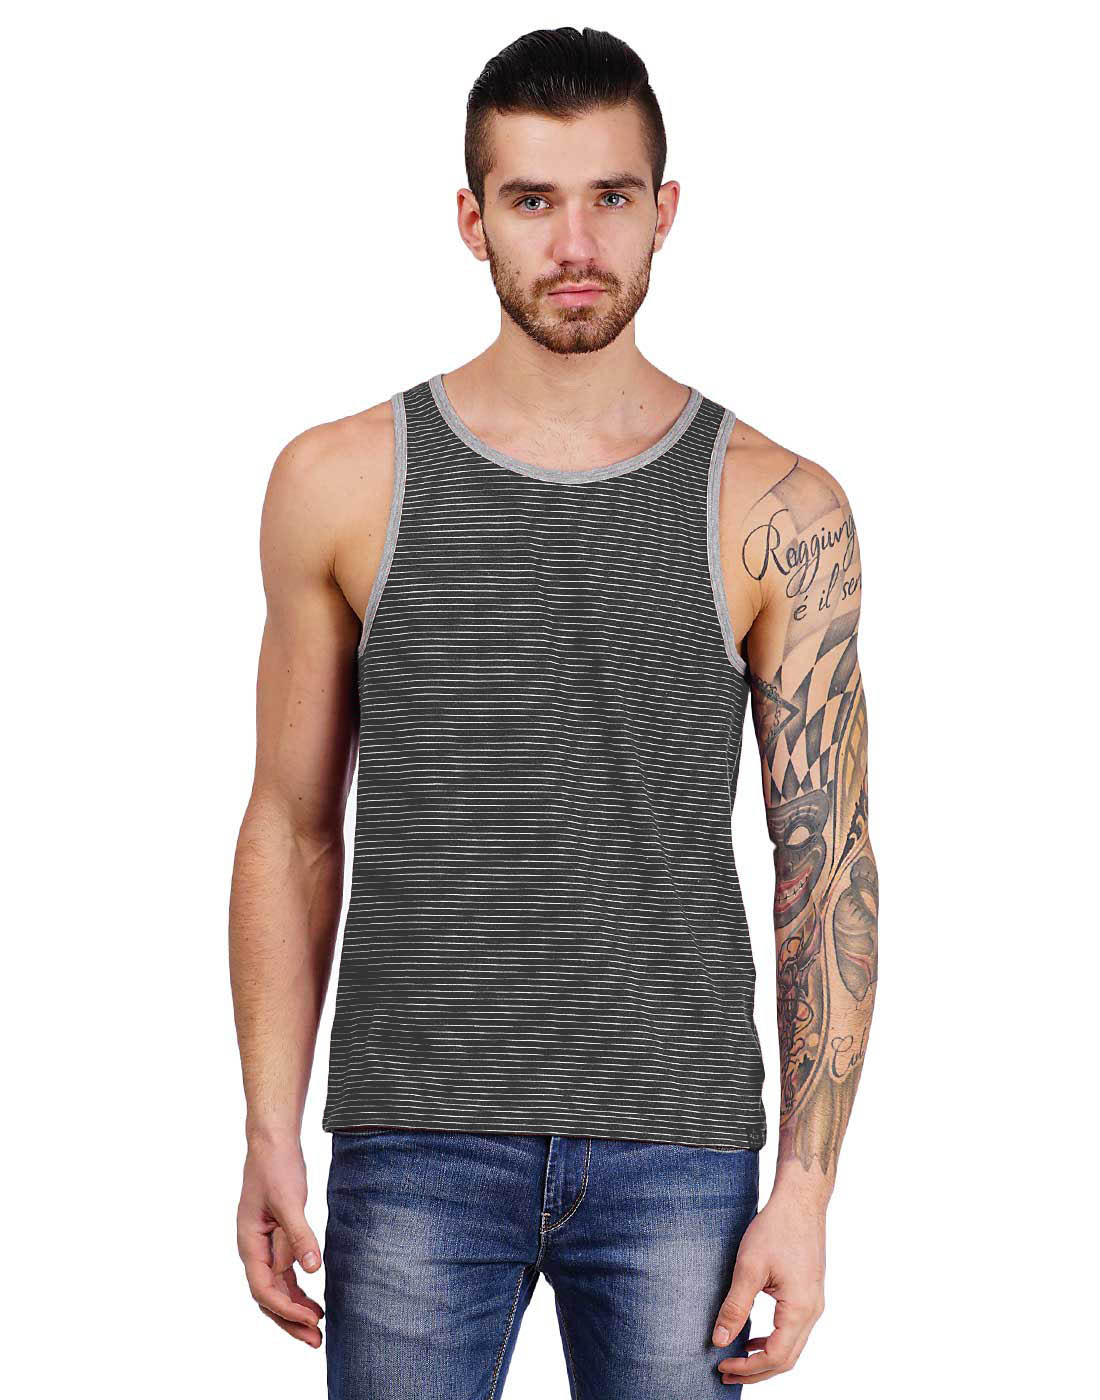 Buy Foldin Striped Mens Vest Online @ ₹339 from ShopClues